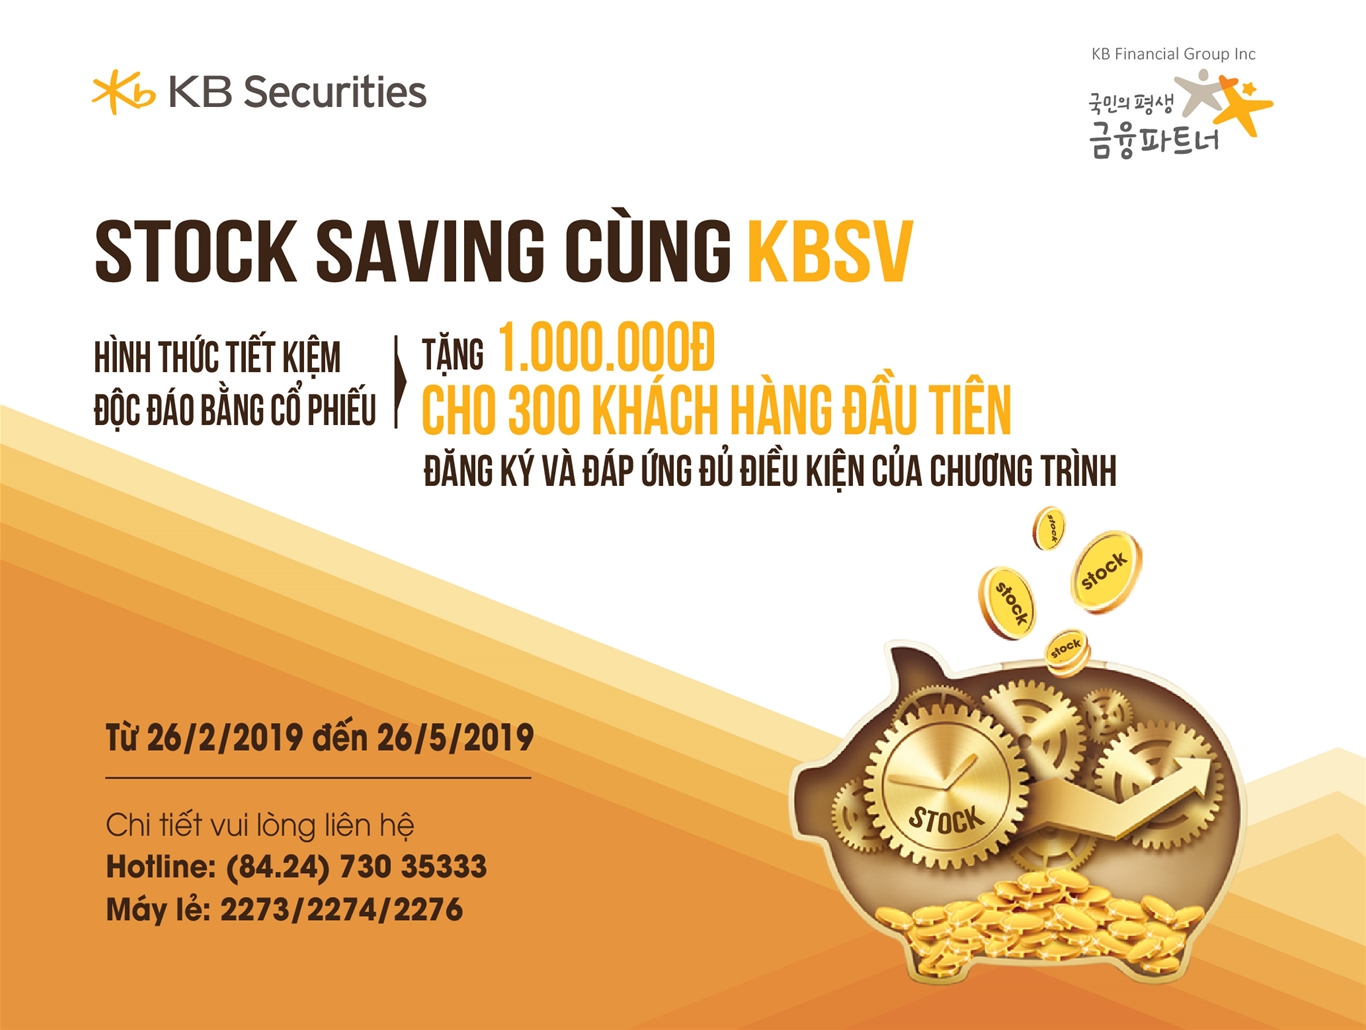 KBSV launch Stock saving with KBSV